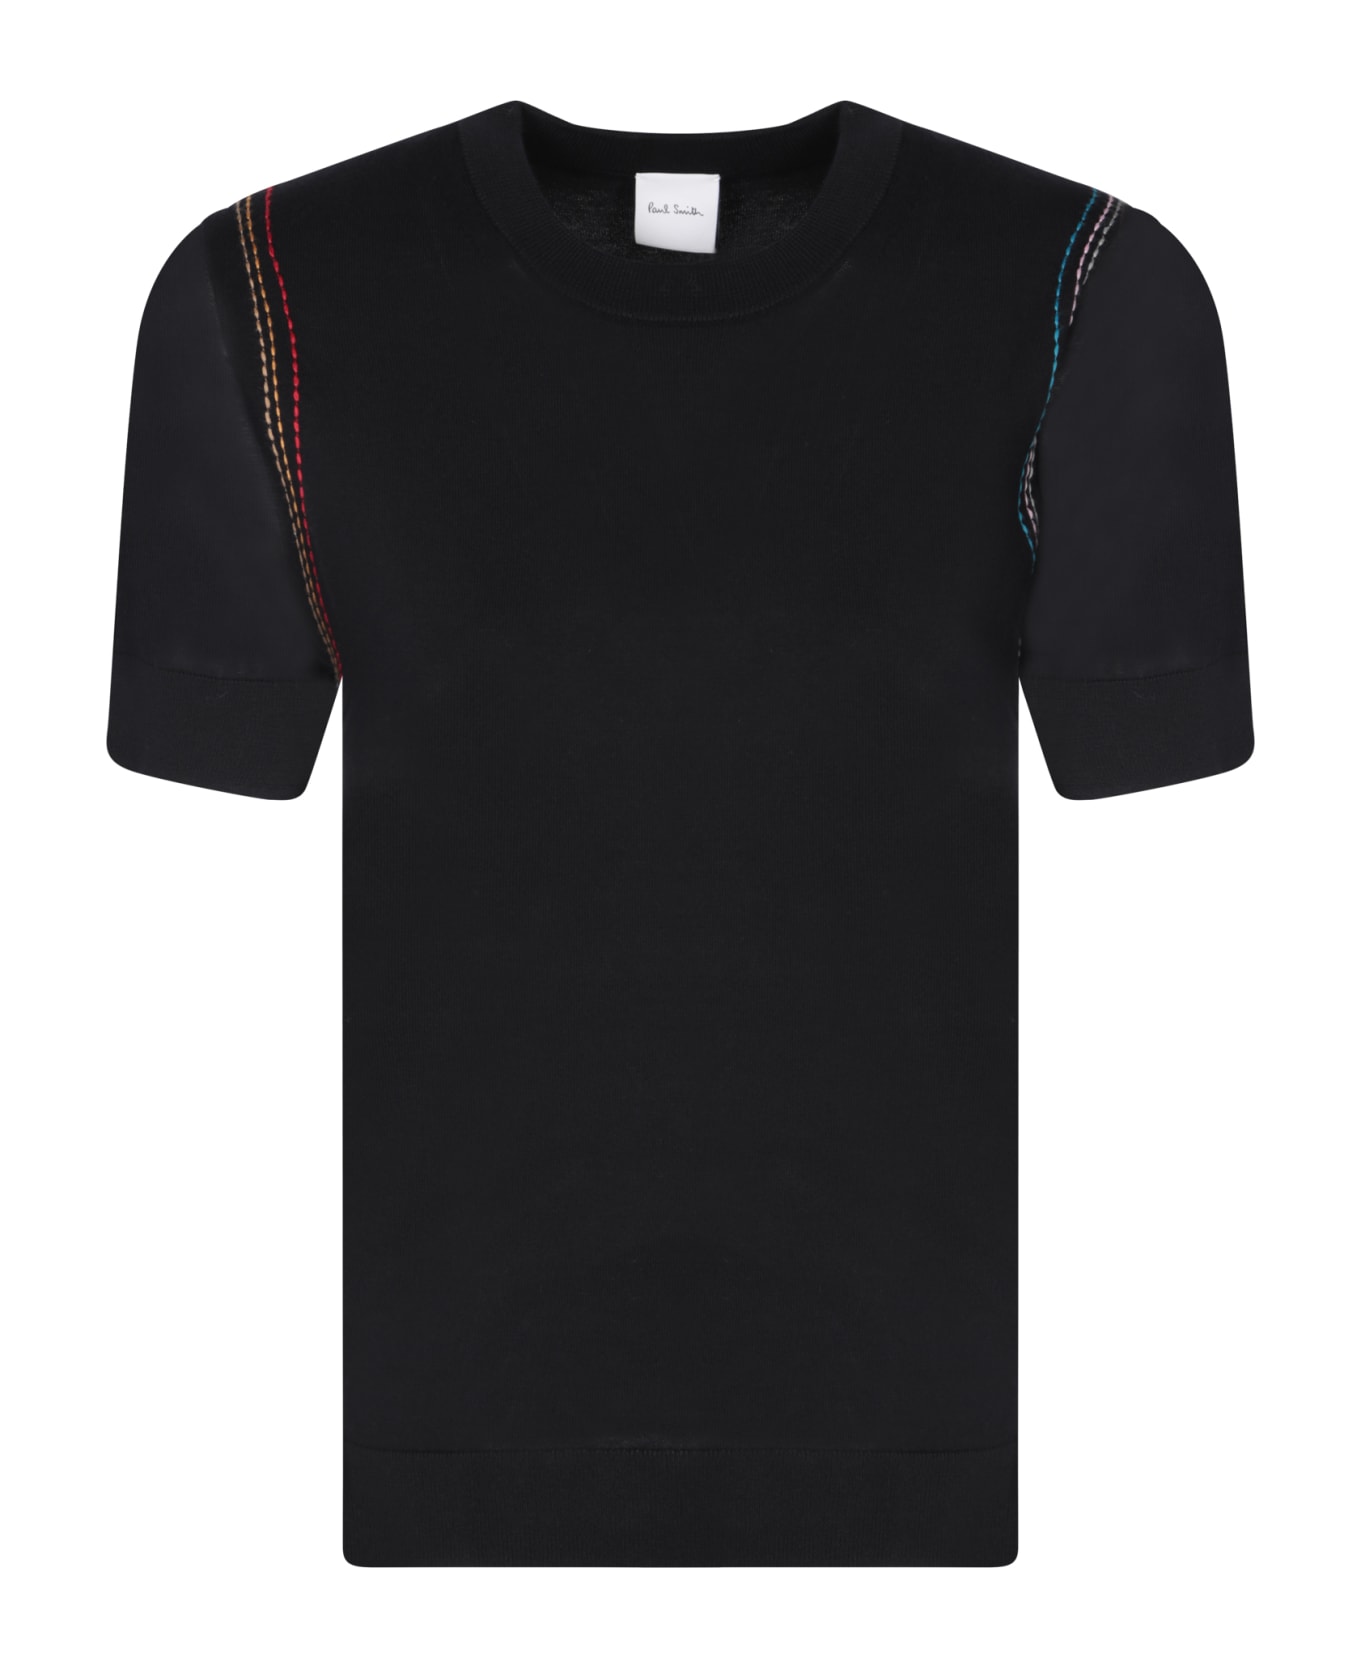 Paul Smith Short Sleeves Black T-shirt - Black